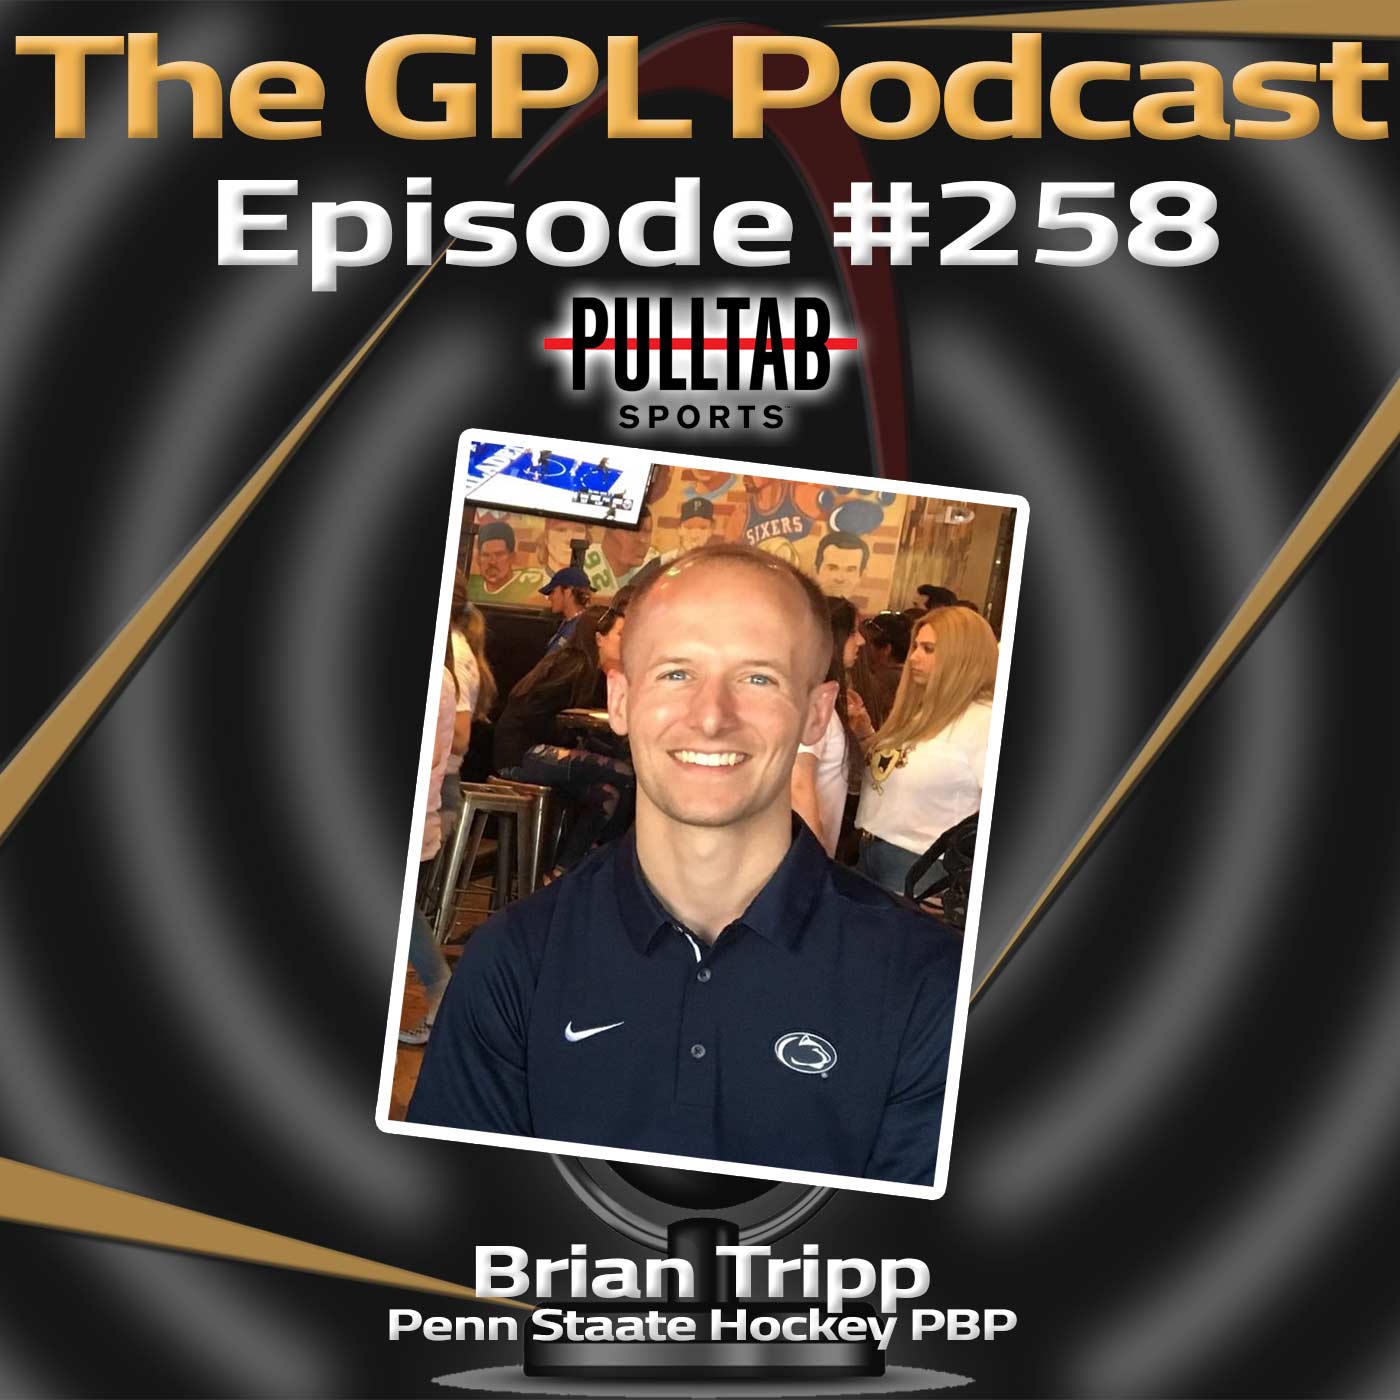 GPL Podcast #258: PSU Hockey Voice Brian Tripp